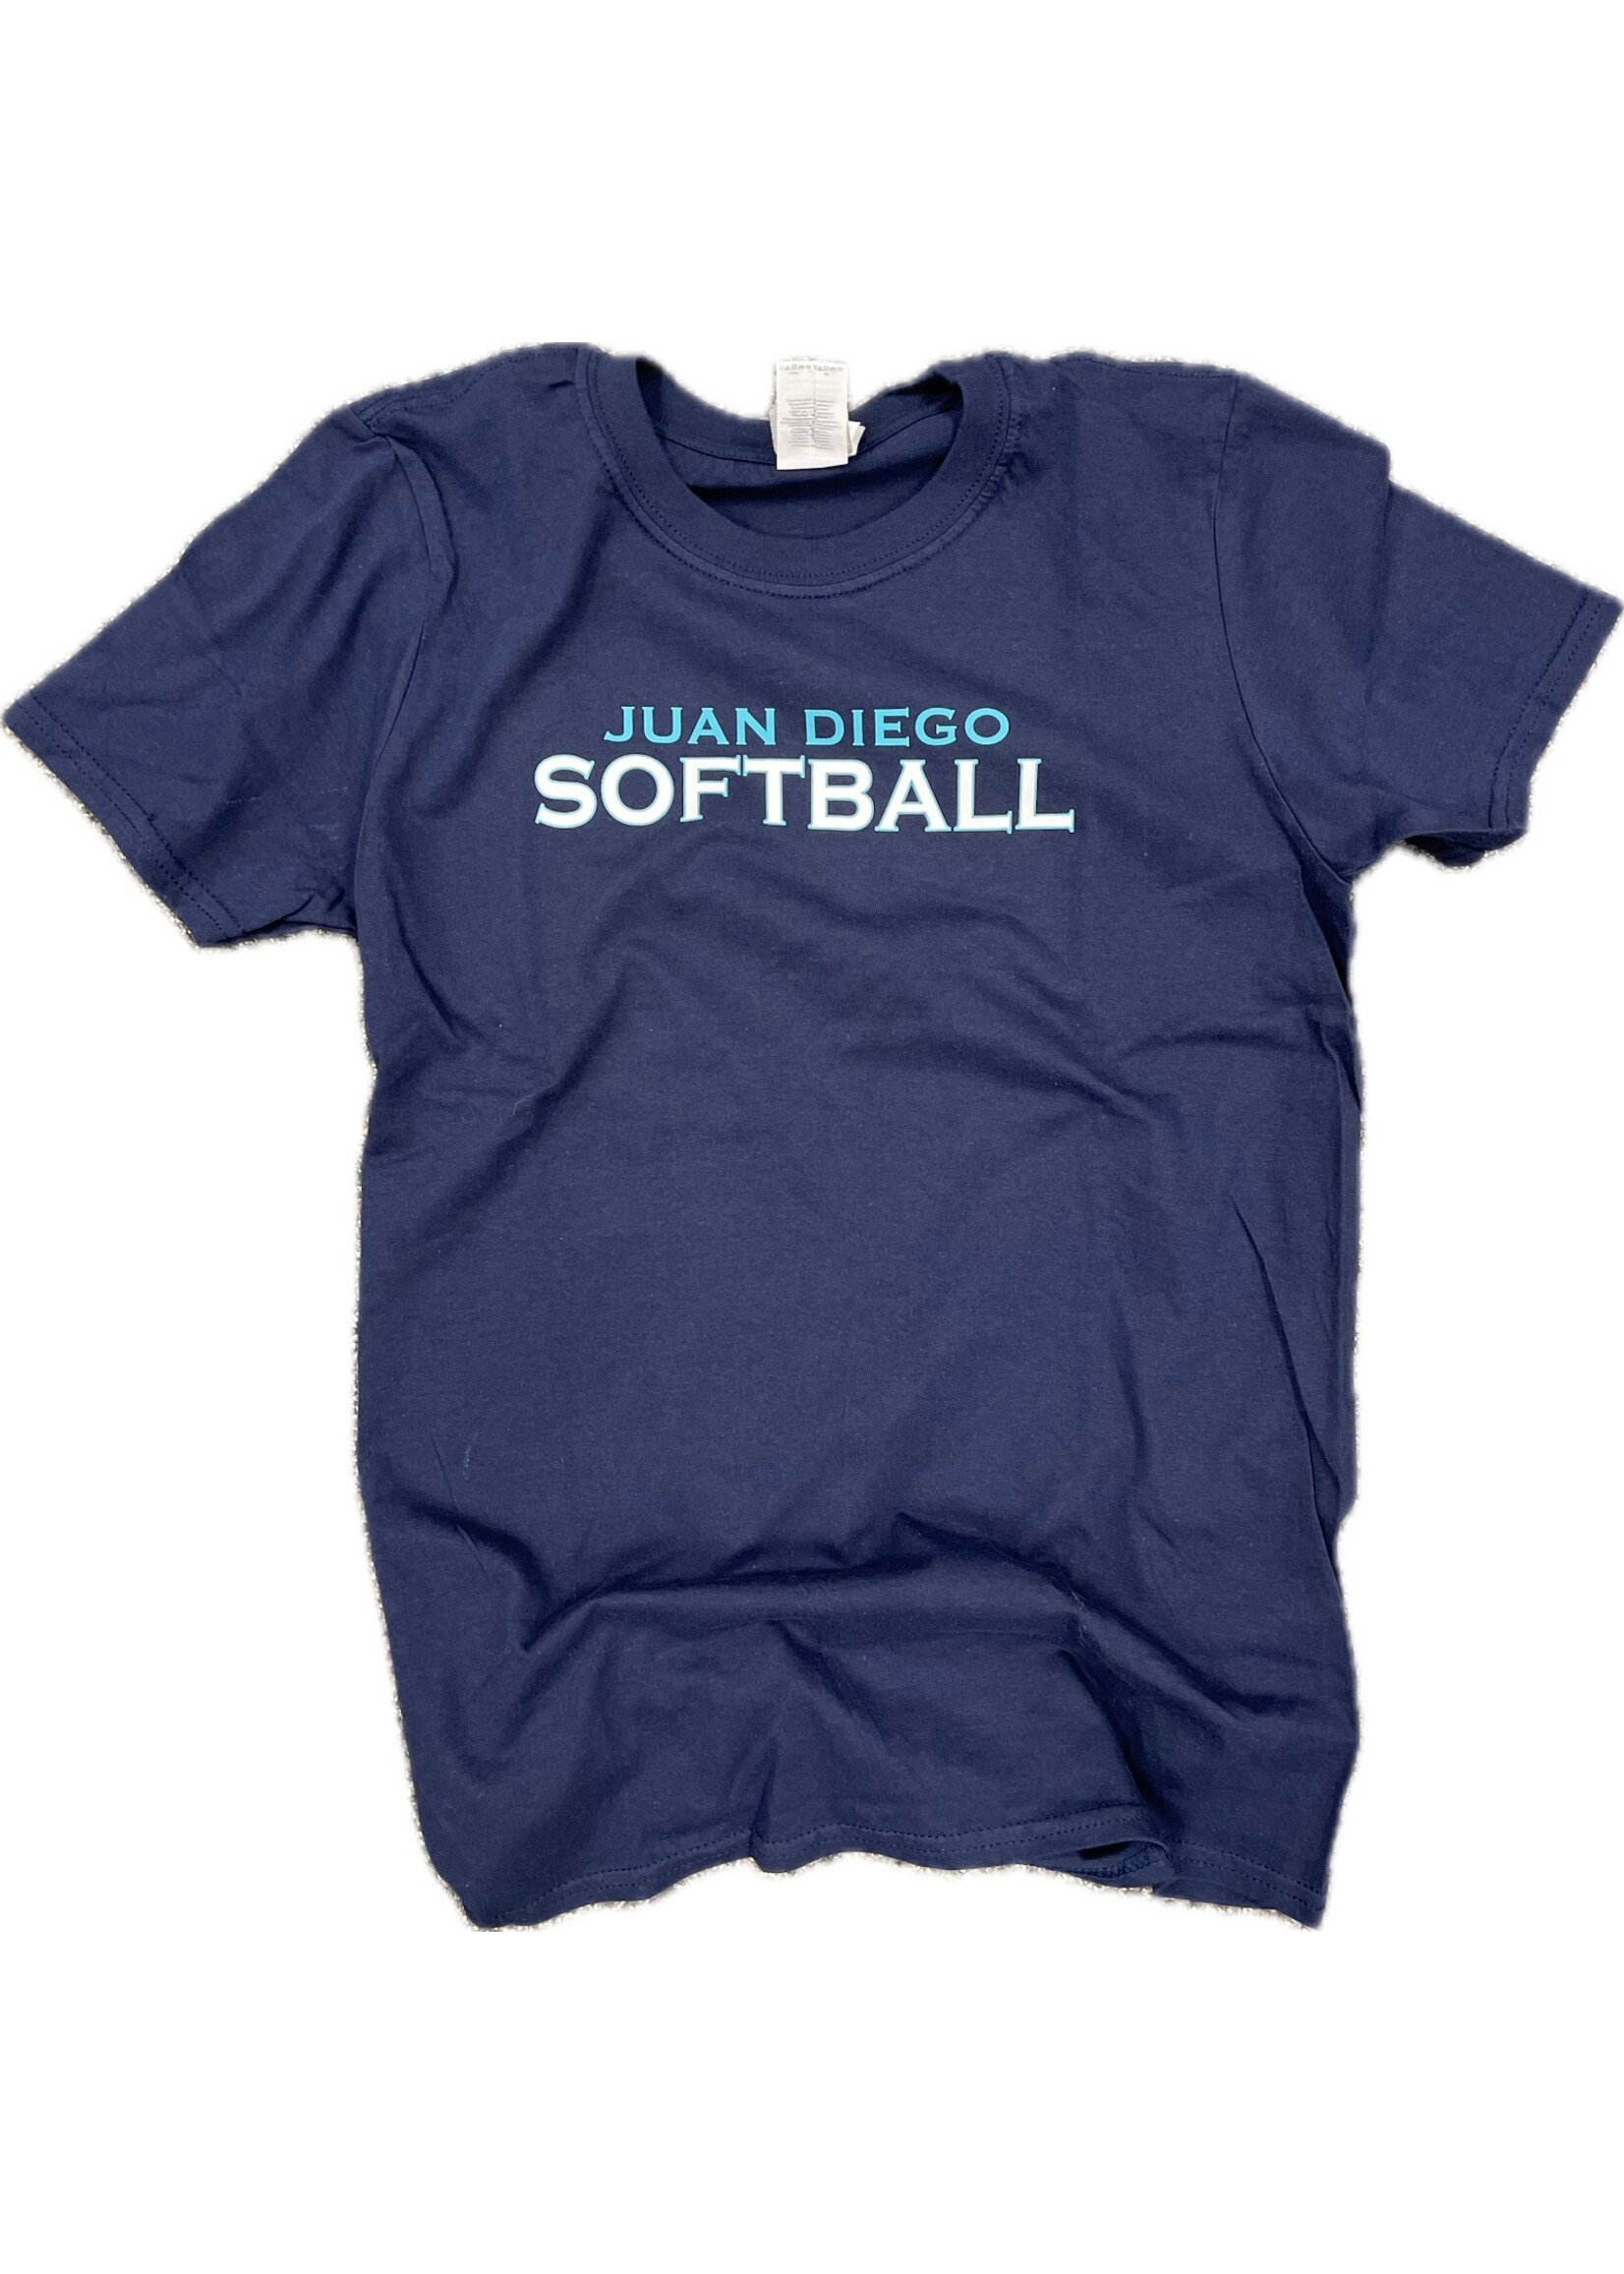 NON-UNIFORM Softball, Juan Diego Softball Custom Order Unisex s/s t-shirt